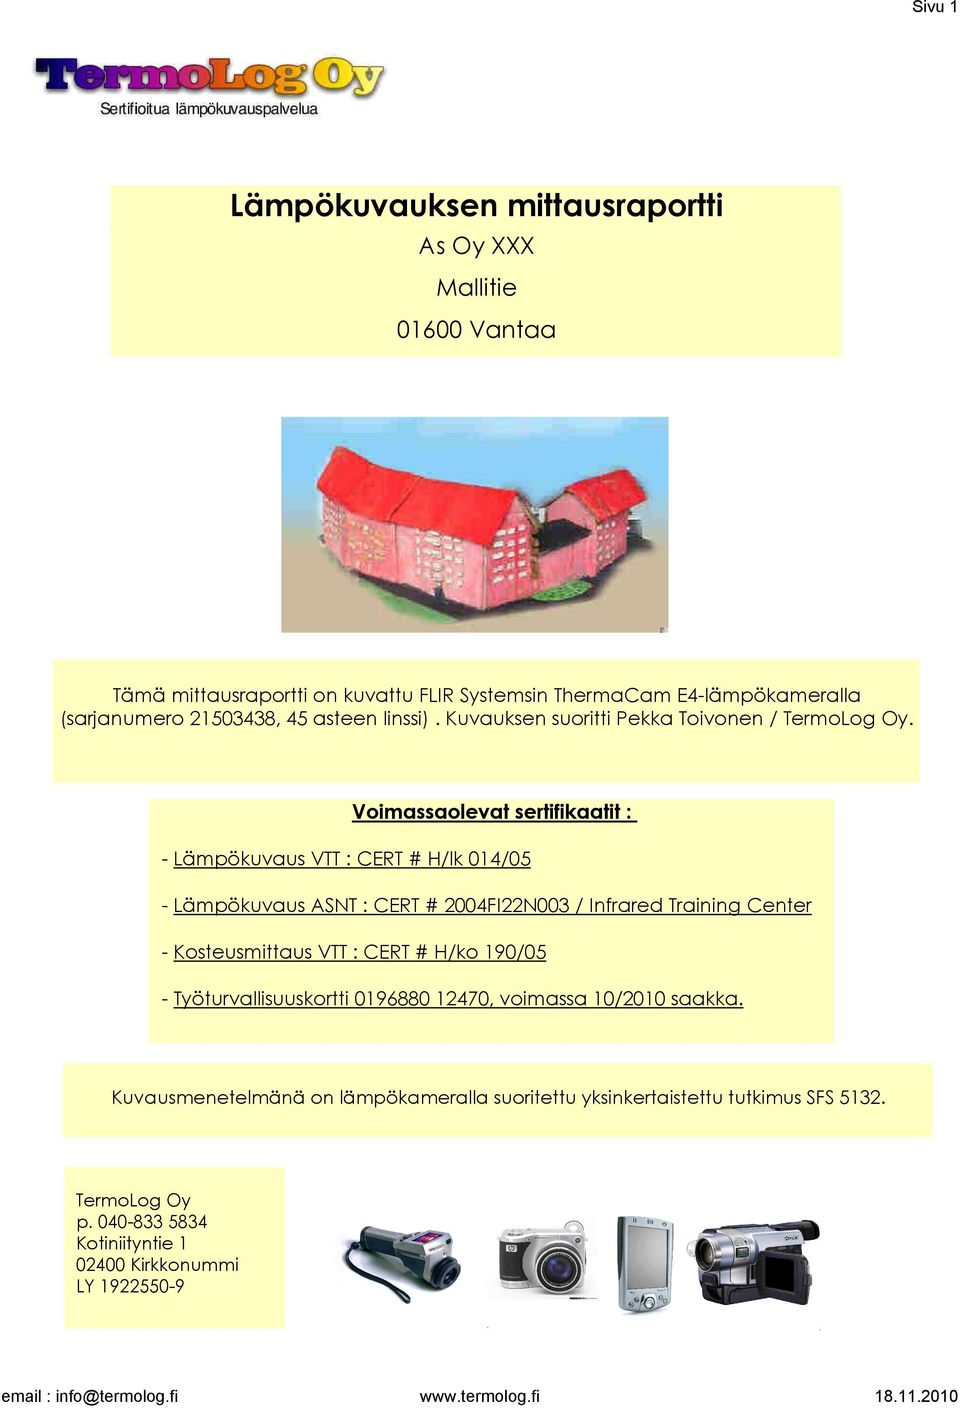 Voimassaolevat sertifikaatit : - Lämpökuvaus VTT : CERT # H/lk 014/05 - Lämpökuvaus ASNT : CERT # 2004FI22N003 / Infrared Training Center - Kosteusmittaus